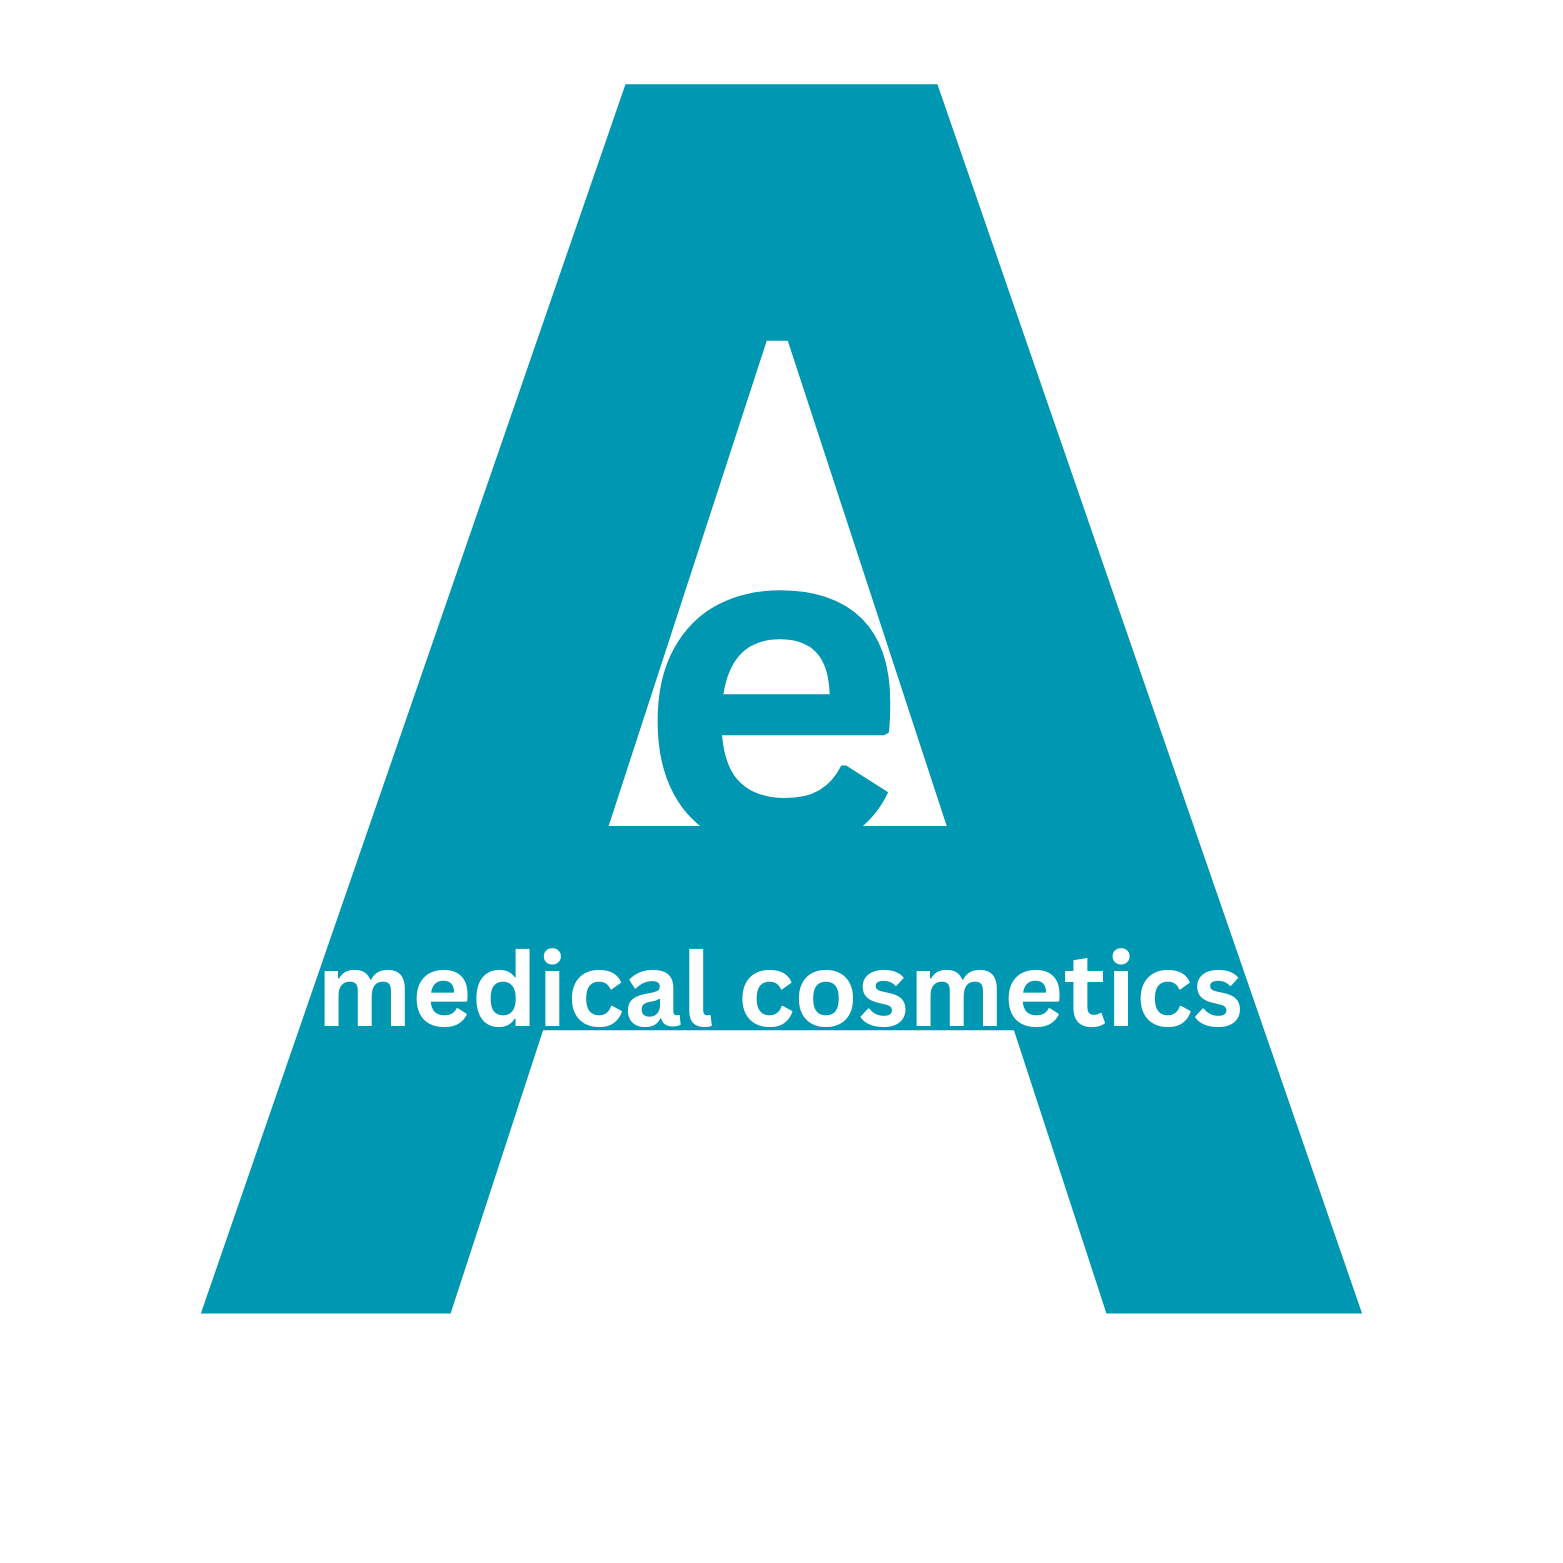 ae medical cosmetics